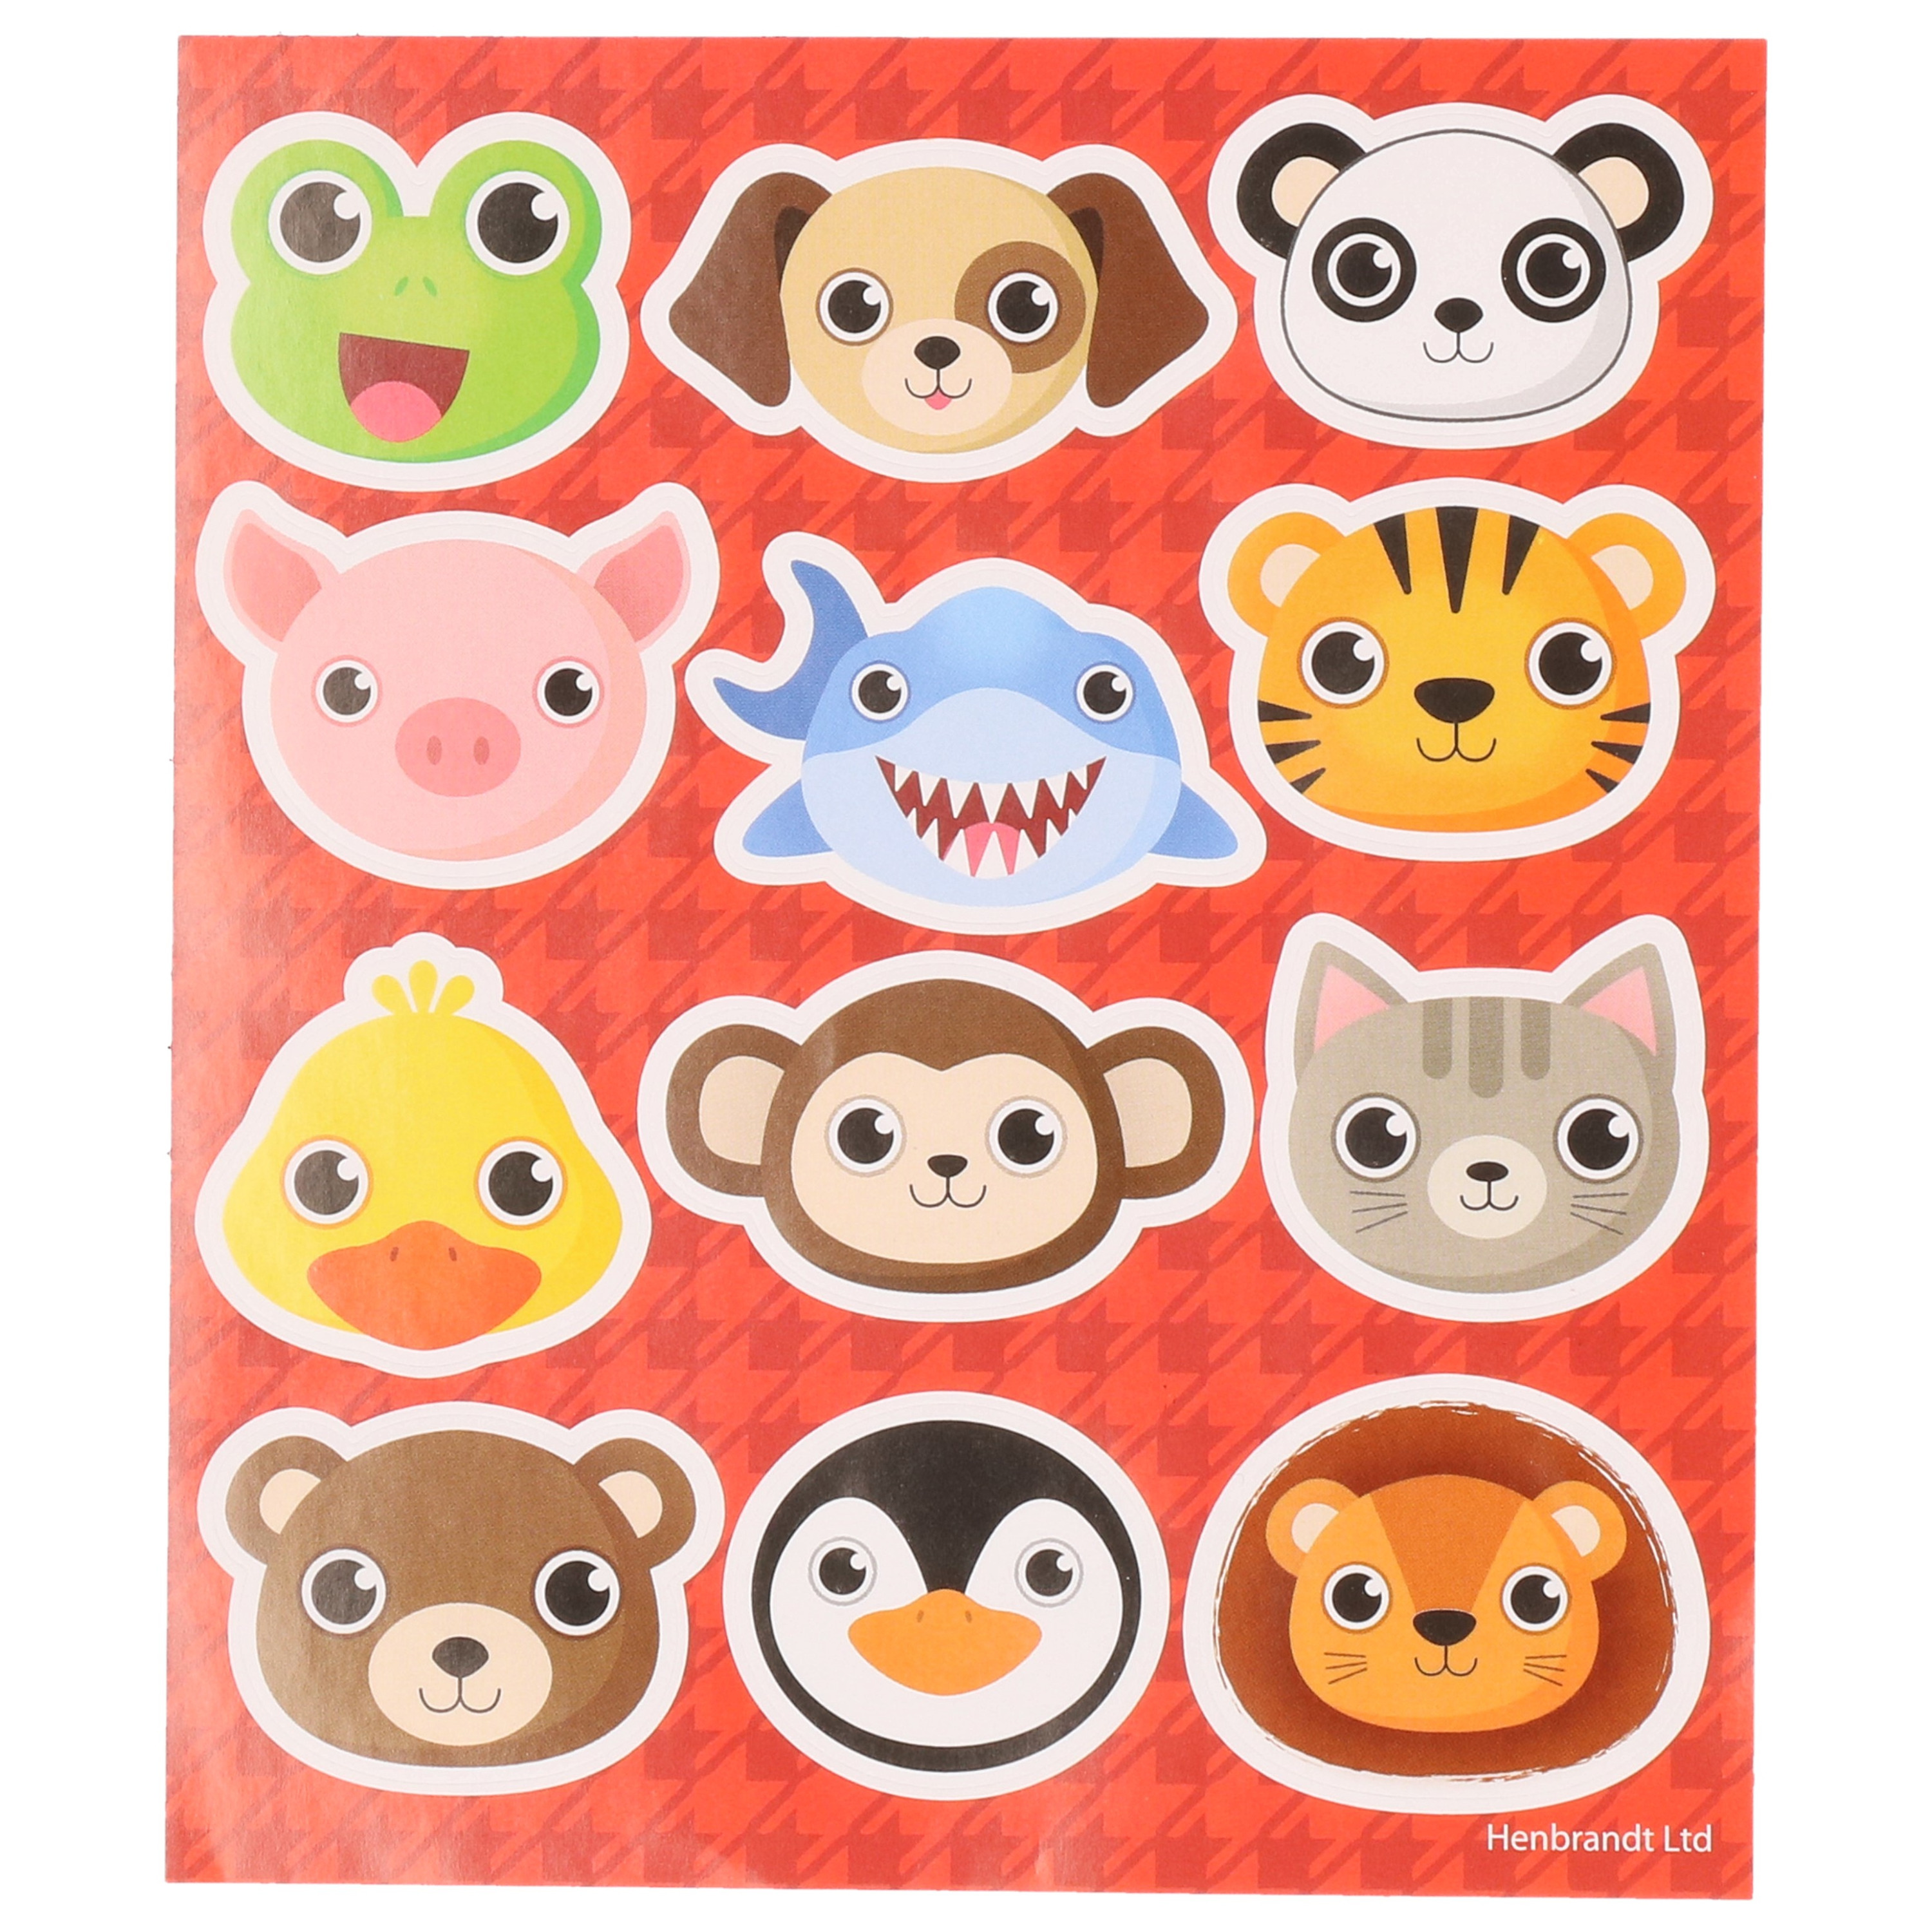 4x Velletjes agenda-dagboek-fun kinder dieren stickers 12 dieren per velletje van 10 x 12 cm